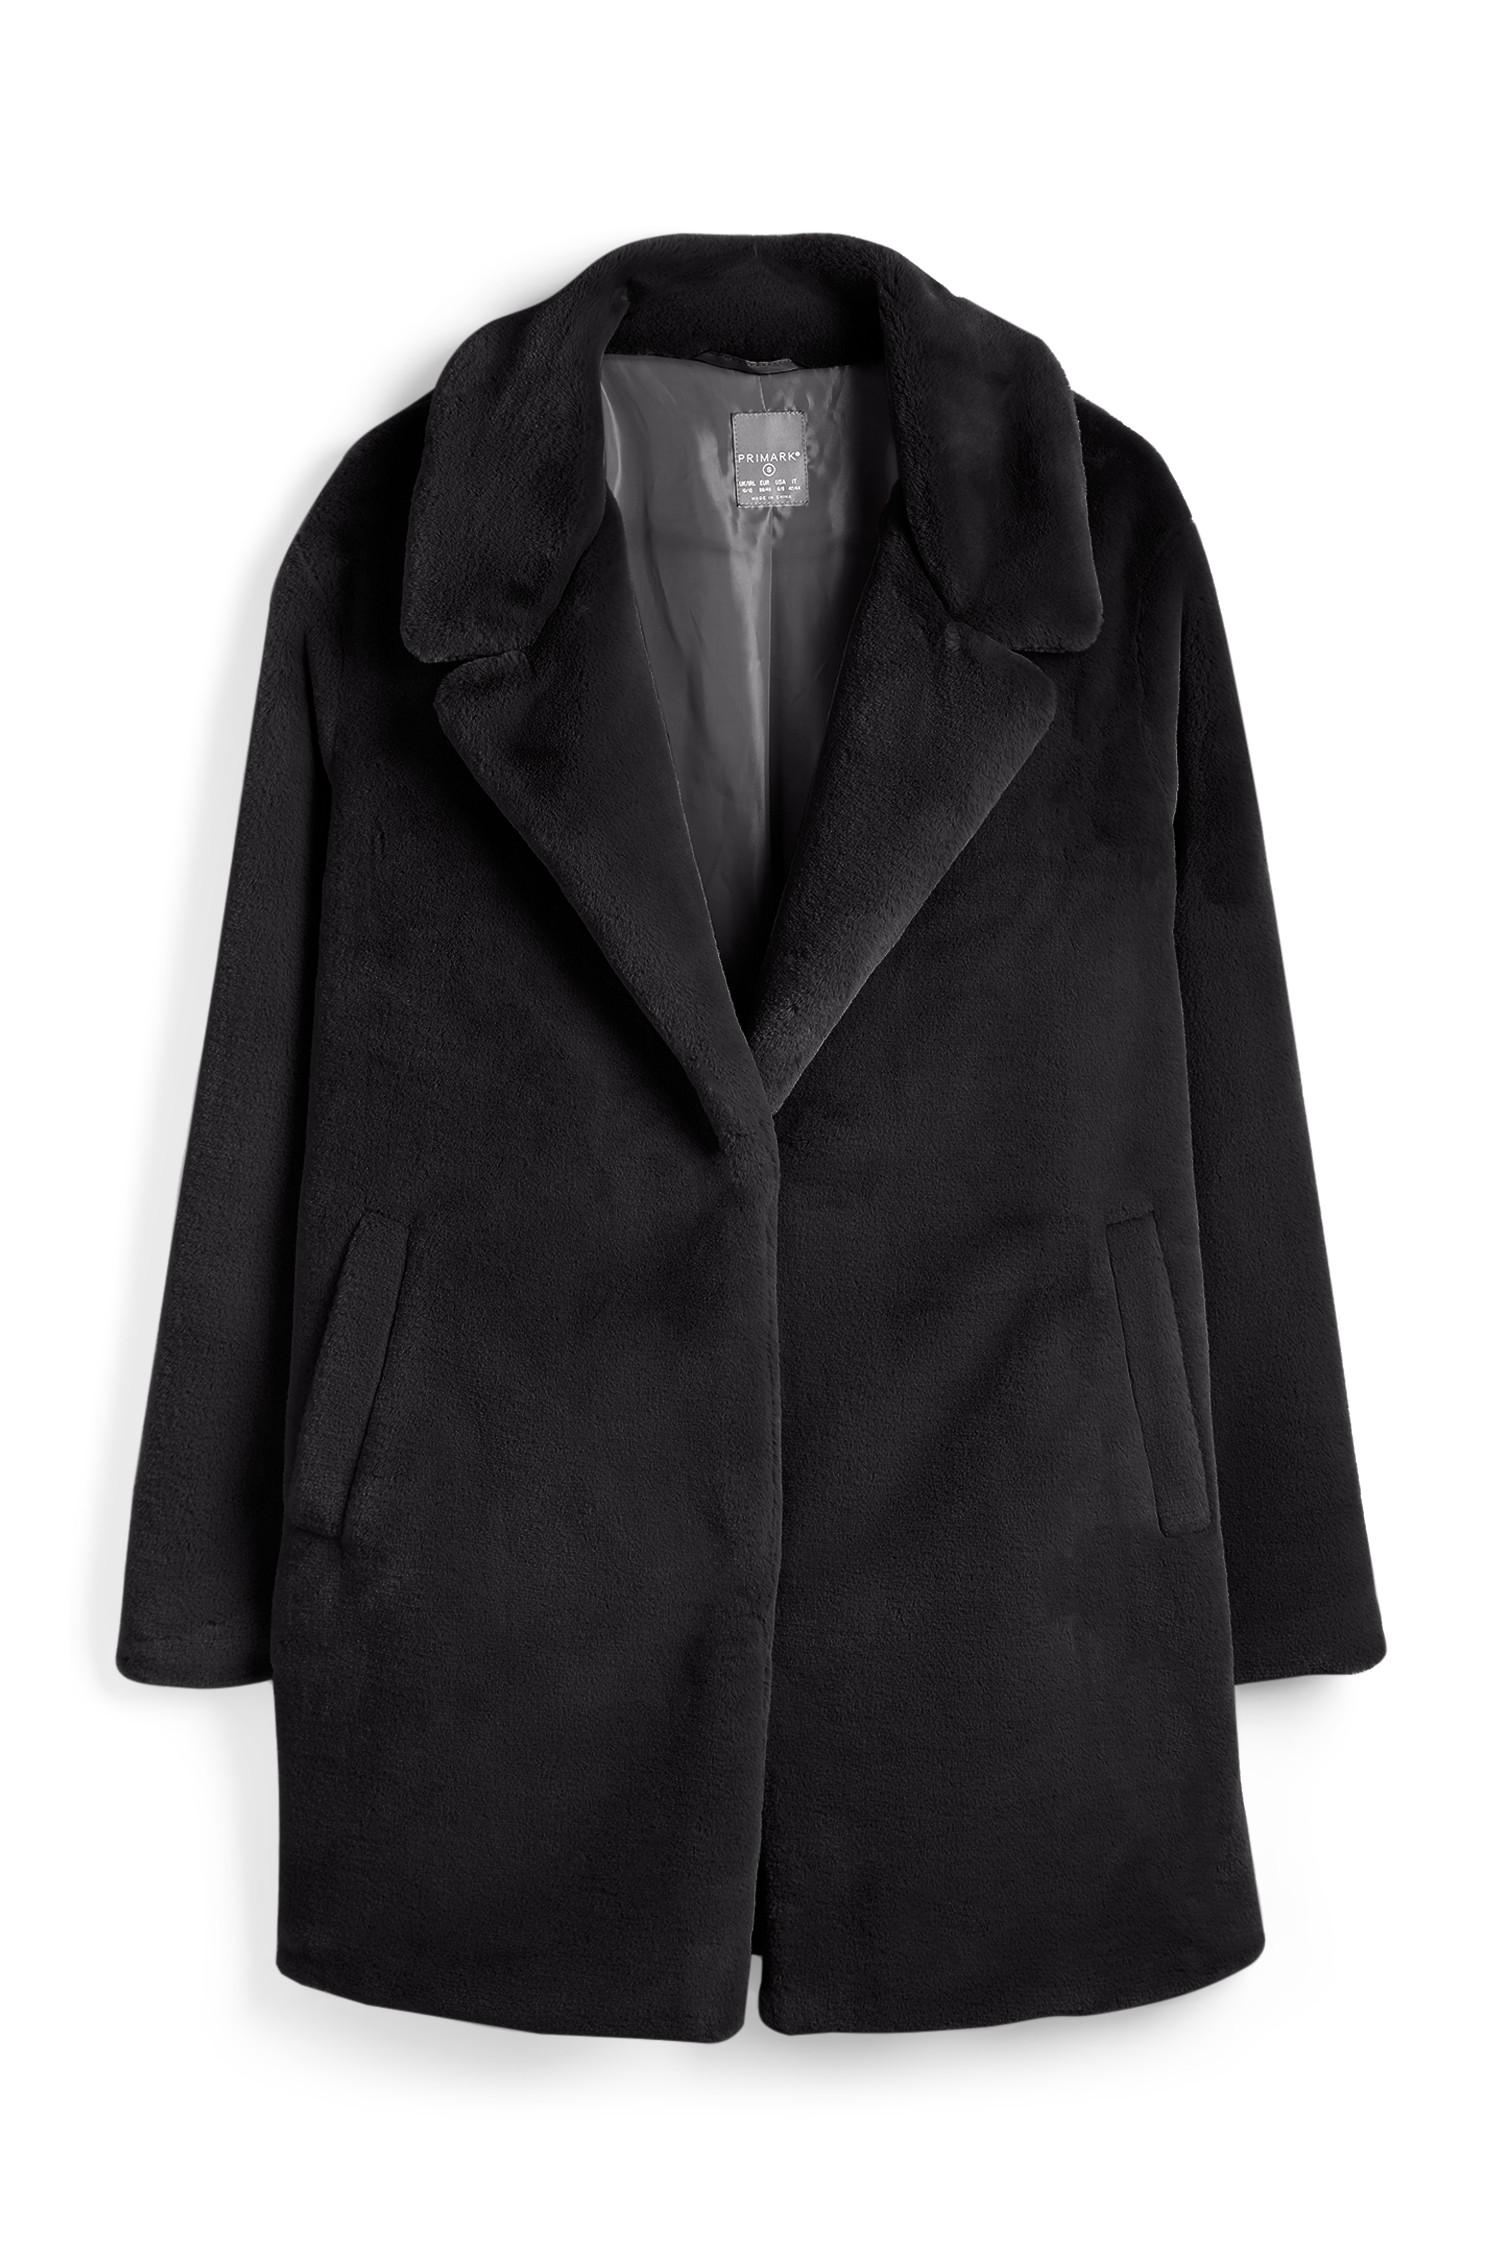 Winter Coat Influencer Style Inspiration | Primark UK